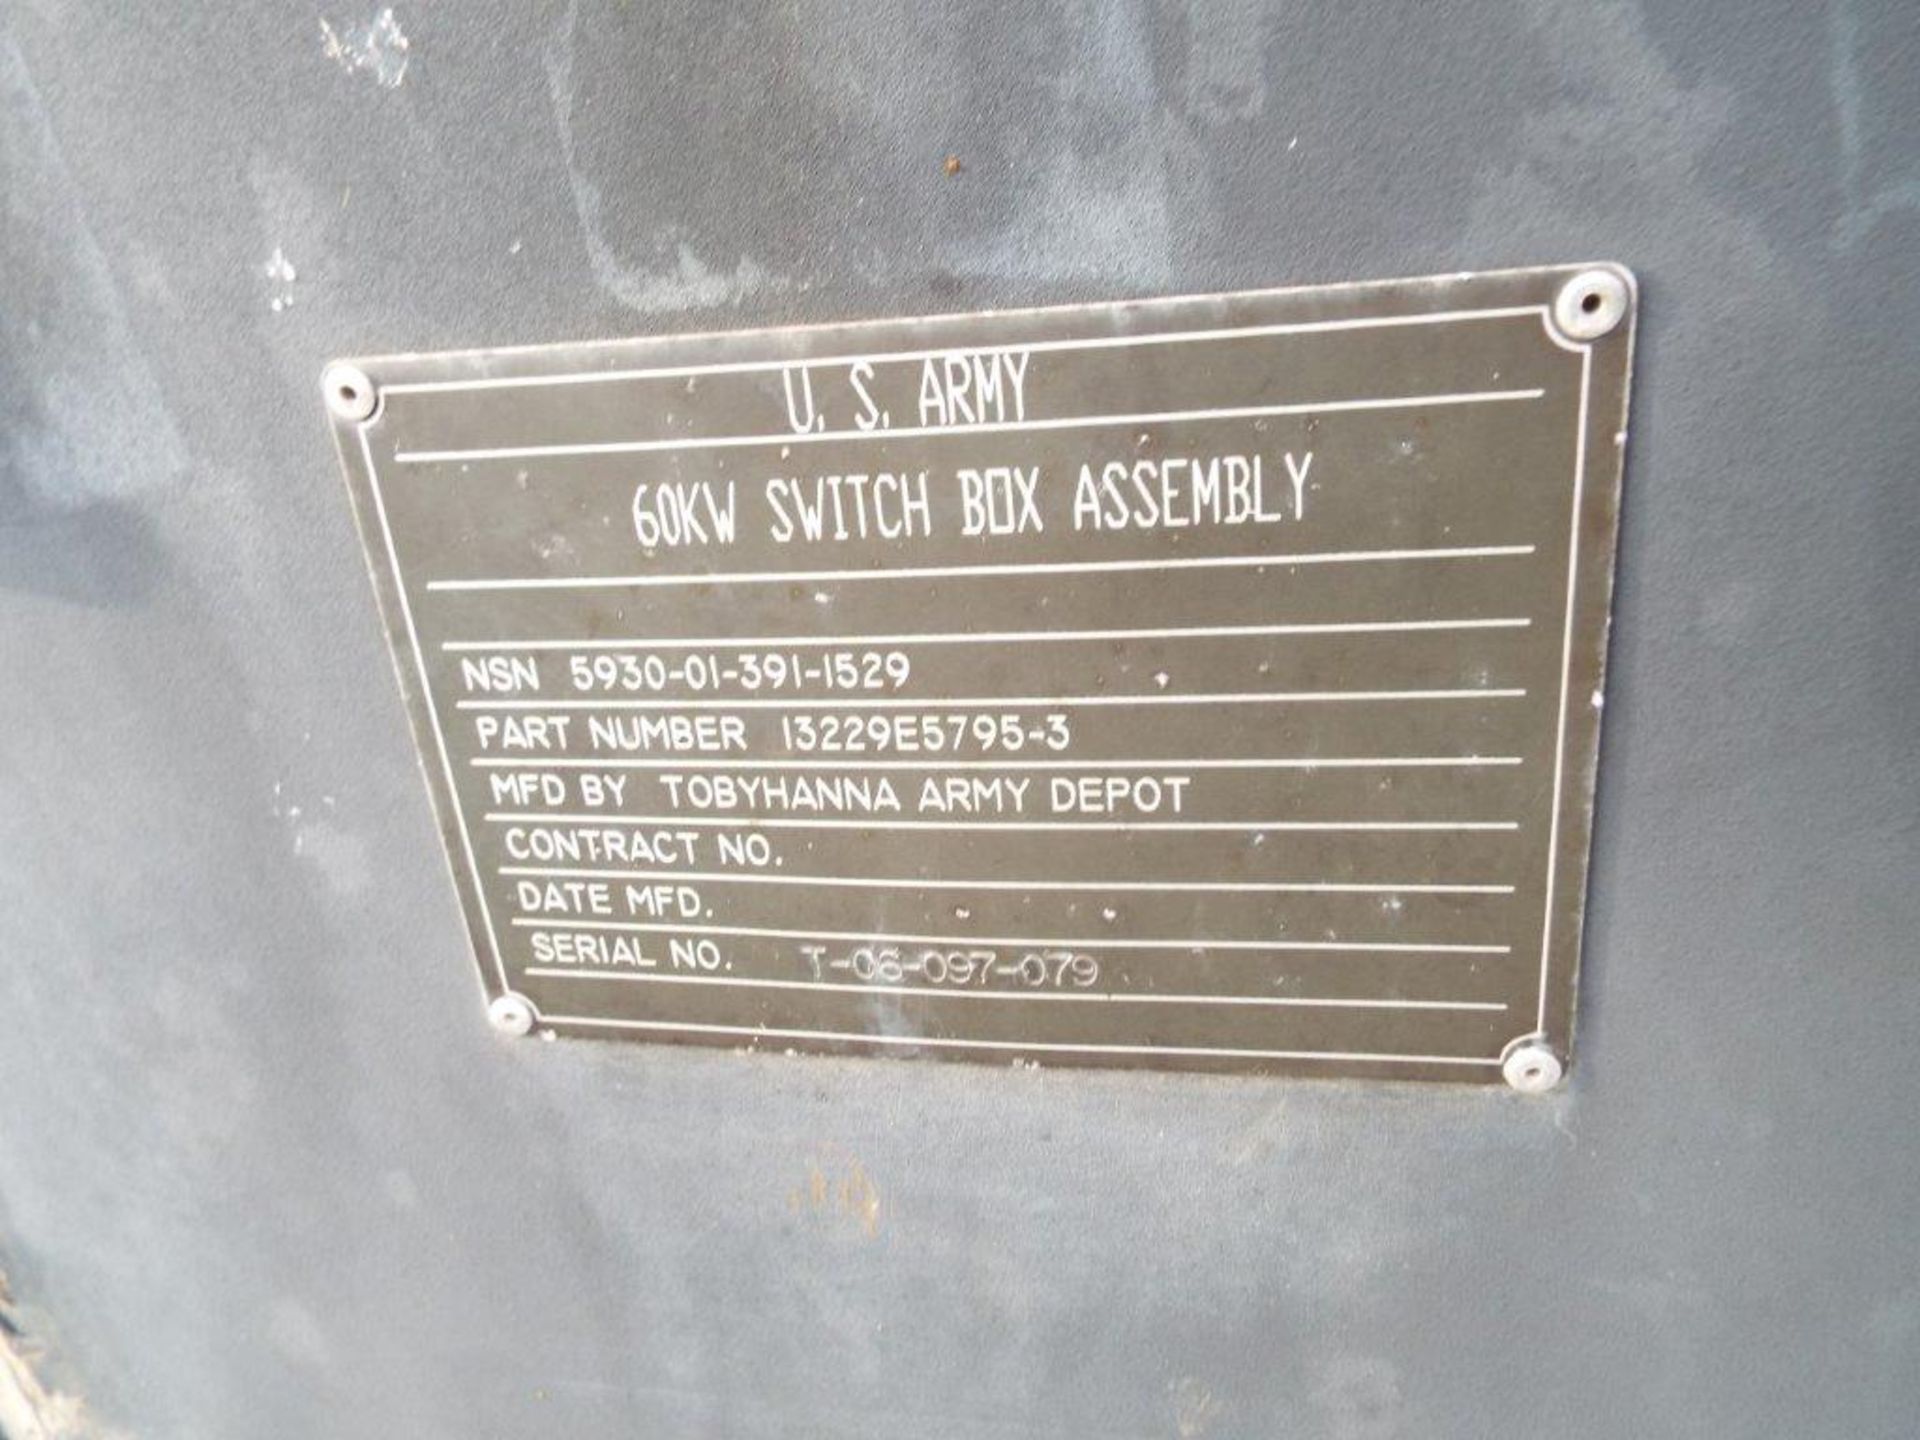 2 x 60Kw Switch Box Assys - Image 9 of 10